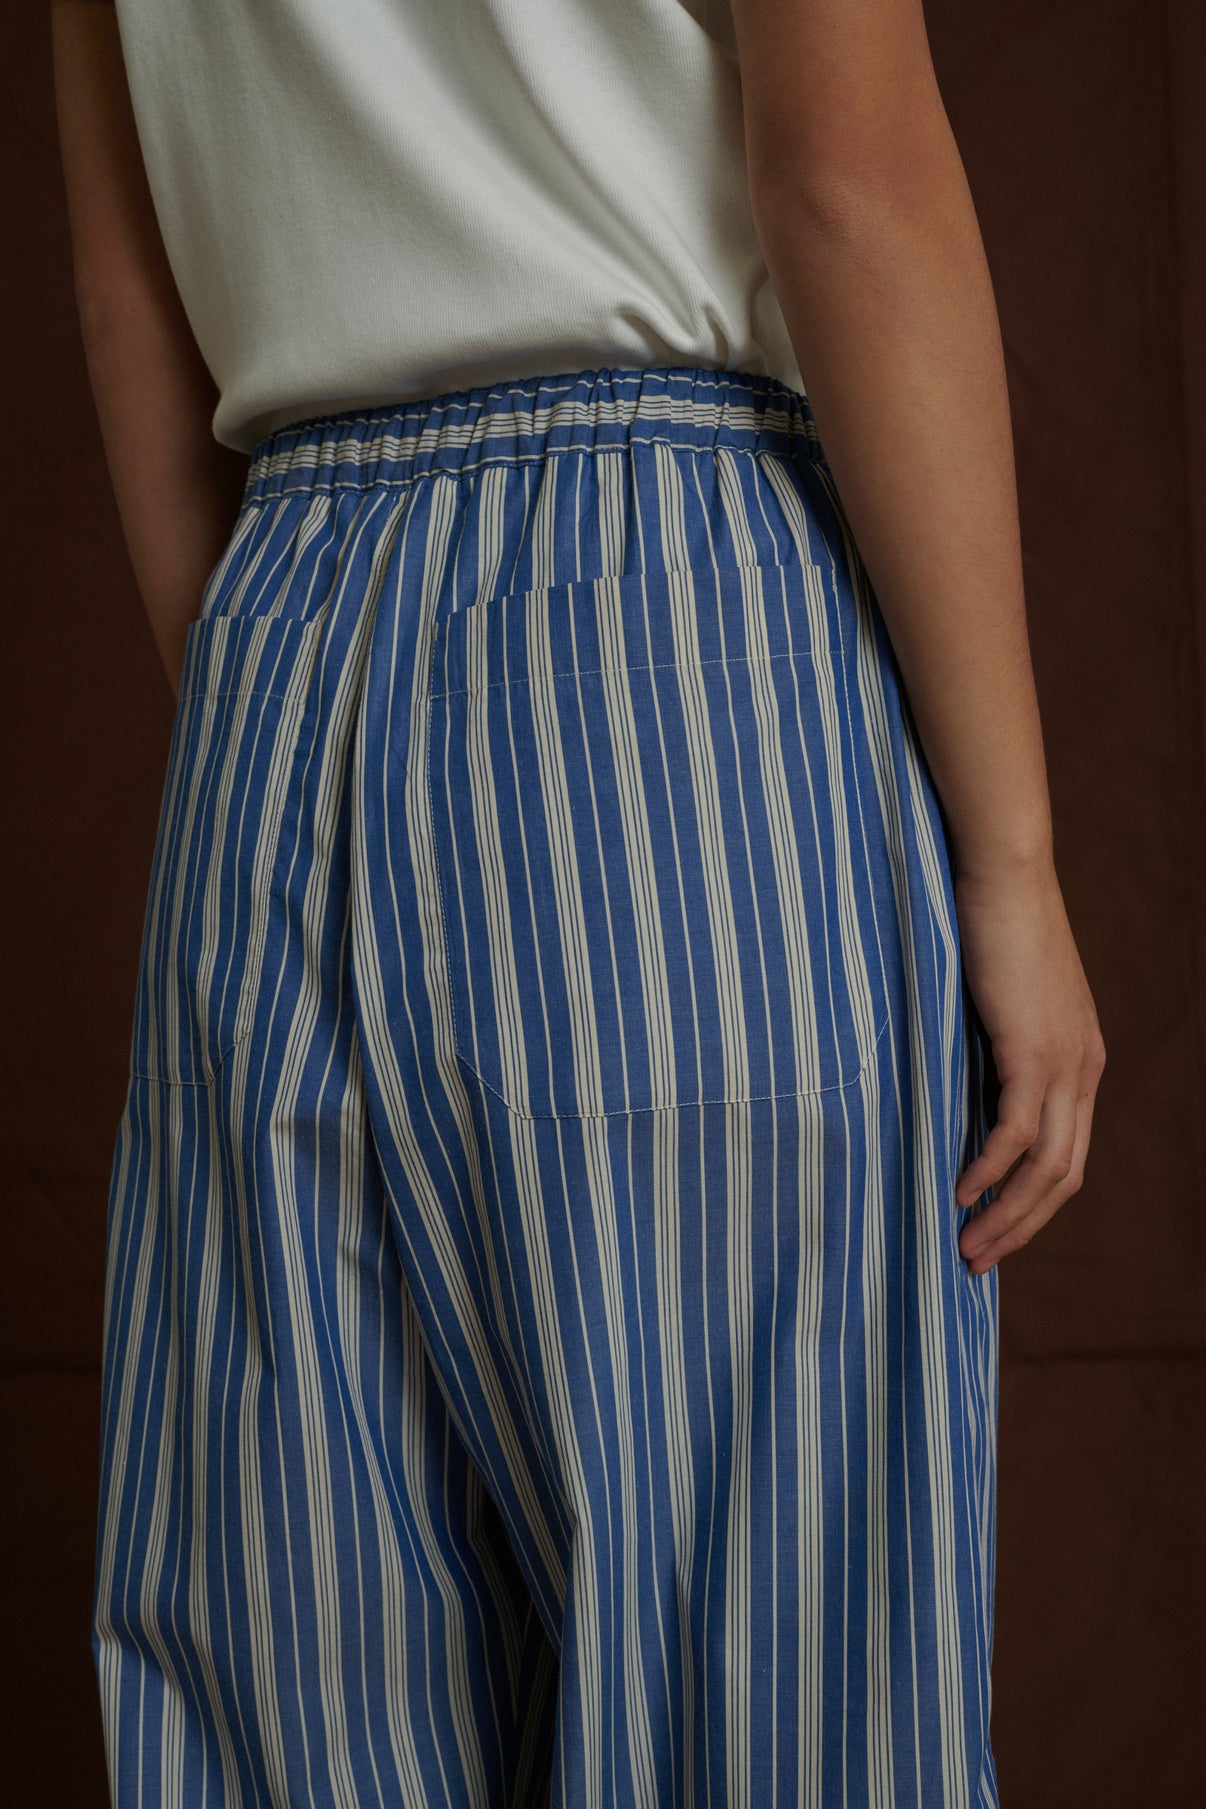 Pantalon Albert - Bleu/Blanc - Coton - Femme vue 4